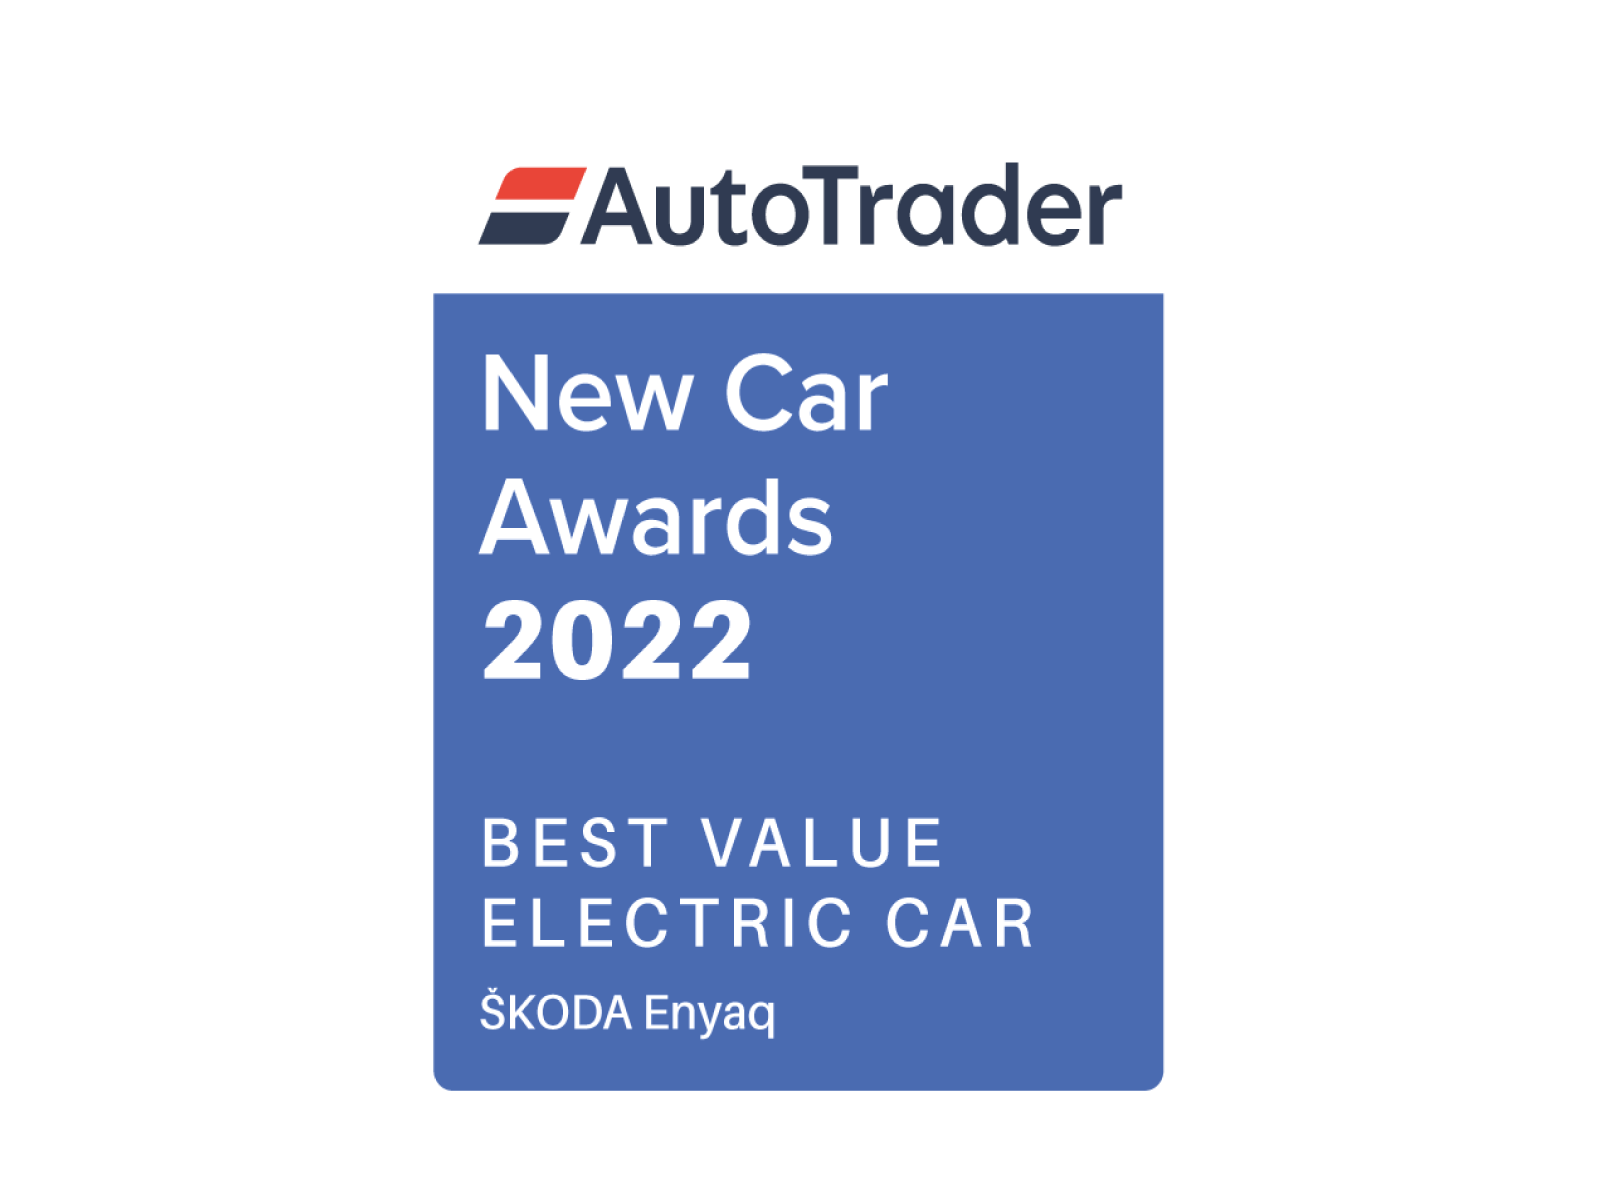 AutoTrader Best Value Electric Car 2022 - SKODA ENYAQ